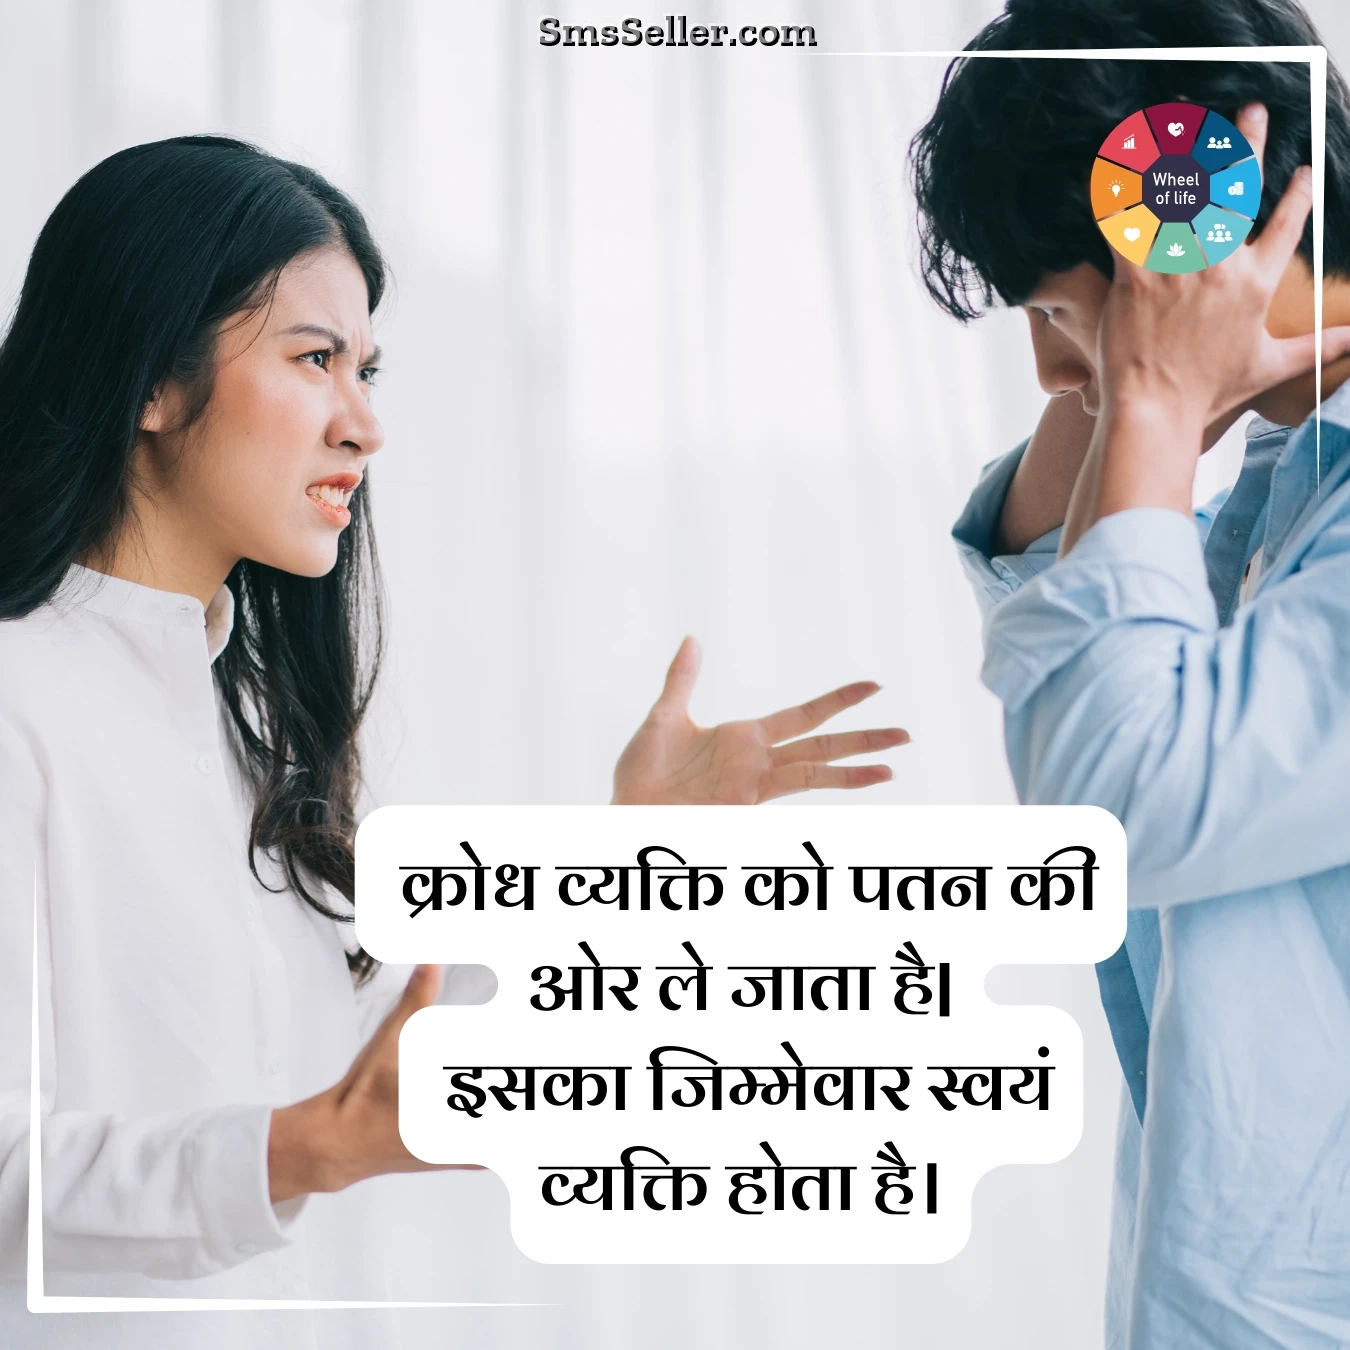 sad quotes hindi gham ke aansu krodh